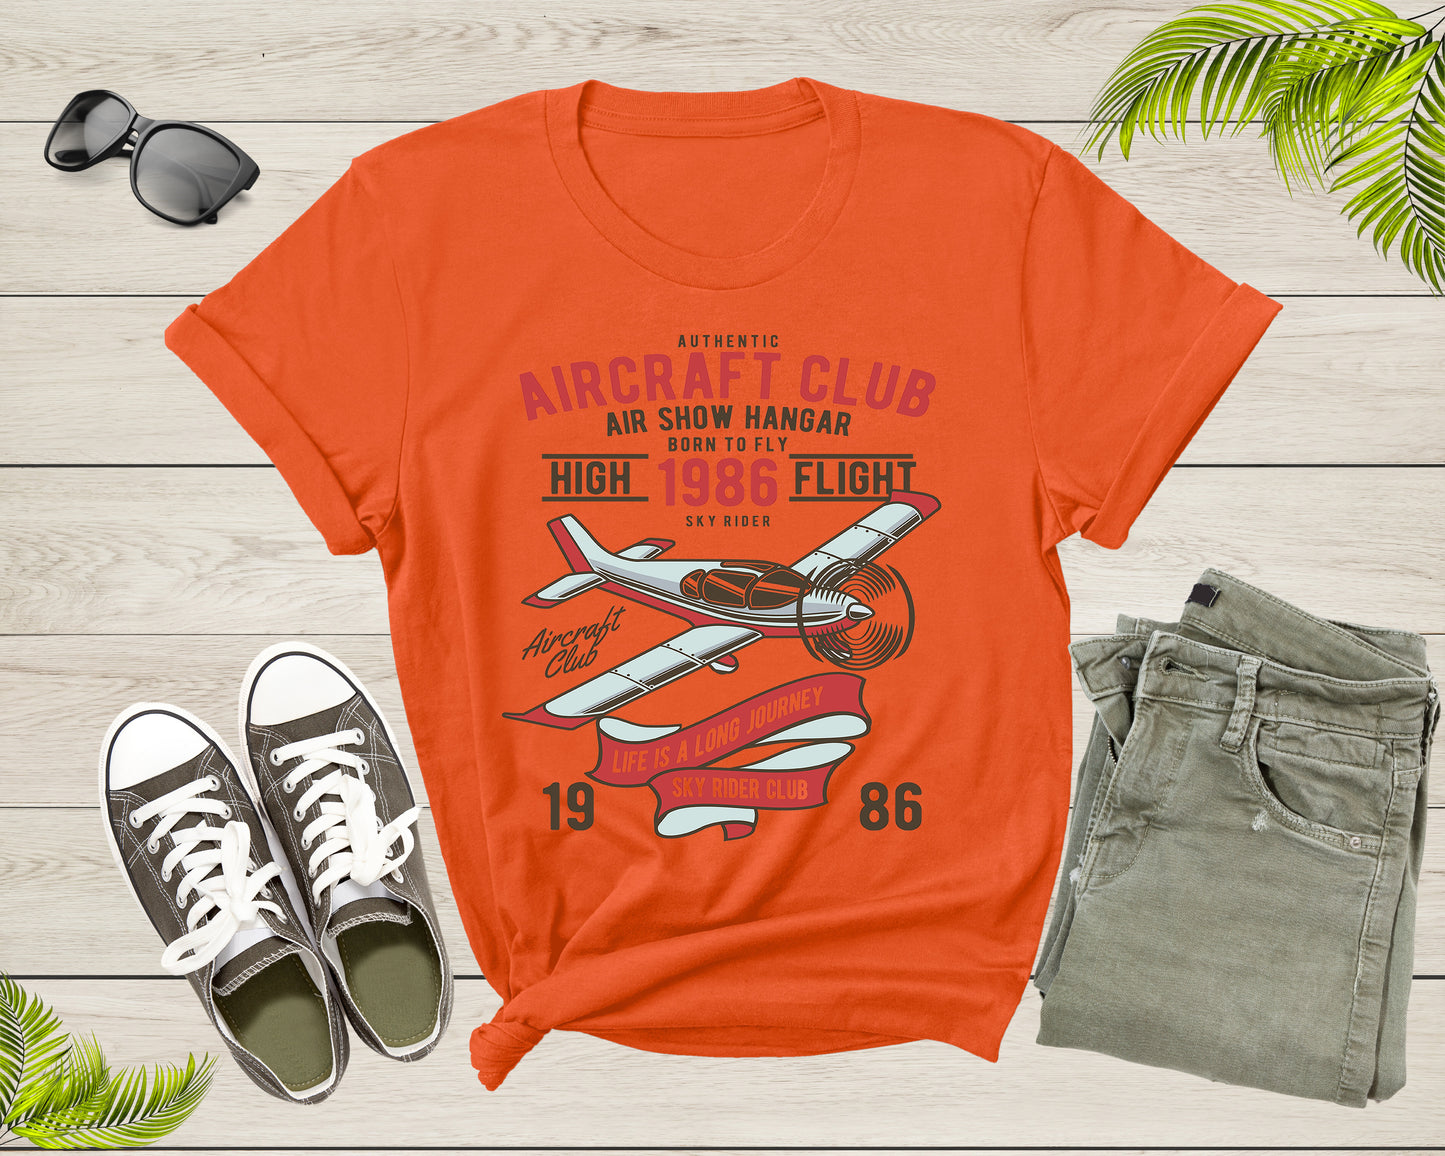 Cool Aircraft Club Plane Fly Airplane for Men Women Kids T-Shirt Plane Shirt for Men Women Kids Boys Girls Teens Pilots Graphic Gift Tshirt